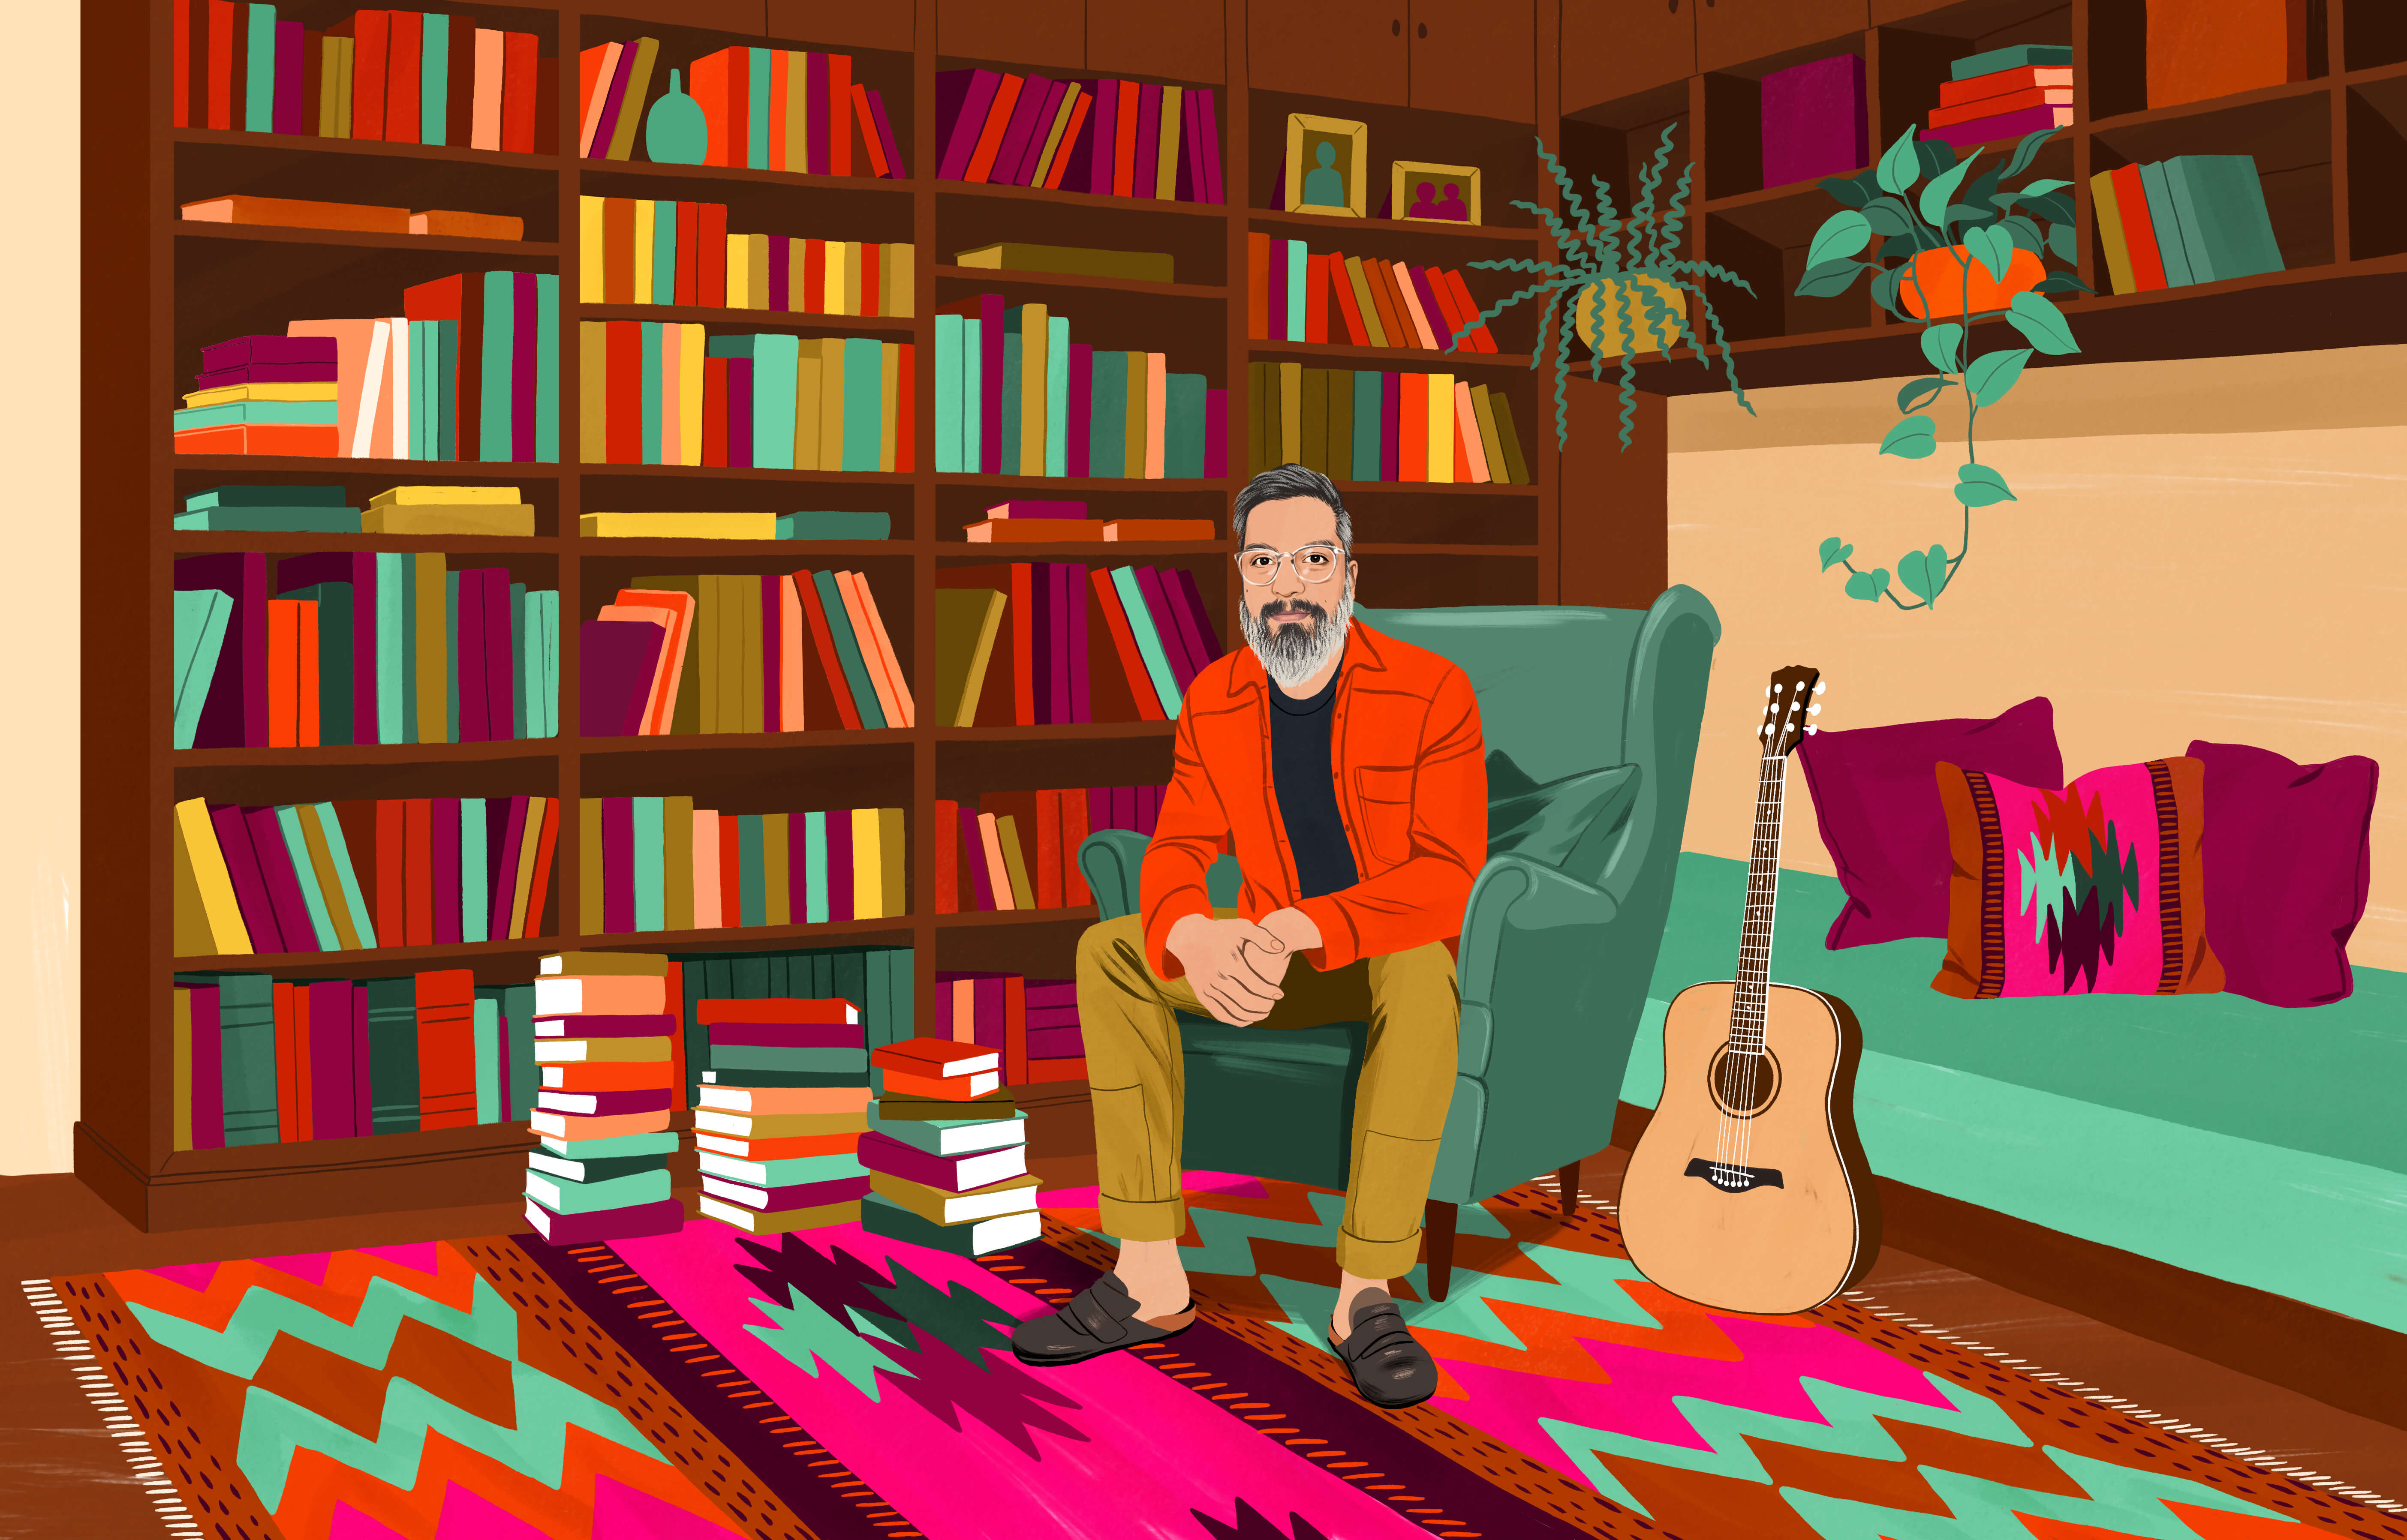 JP 坐在高背扶手椅上，旁边的书架上放满了书，地上也有堆得高高的几摞书。地上铺着彩色花纹的智利传统风格地毯。距离他一臂远的地方立着一把原声吉他。